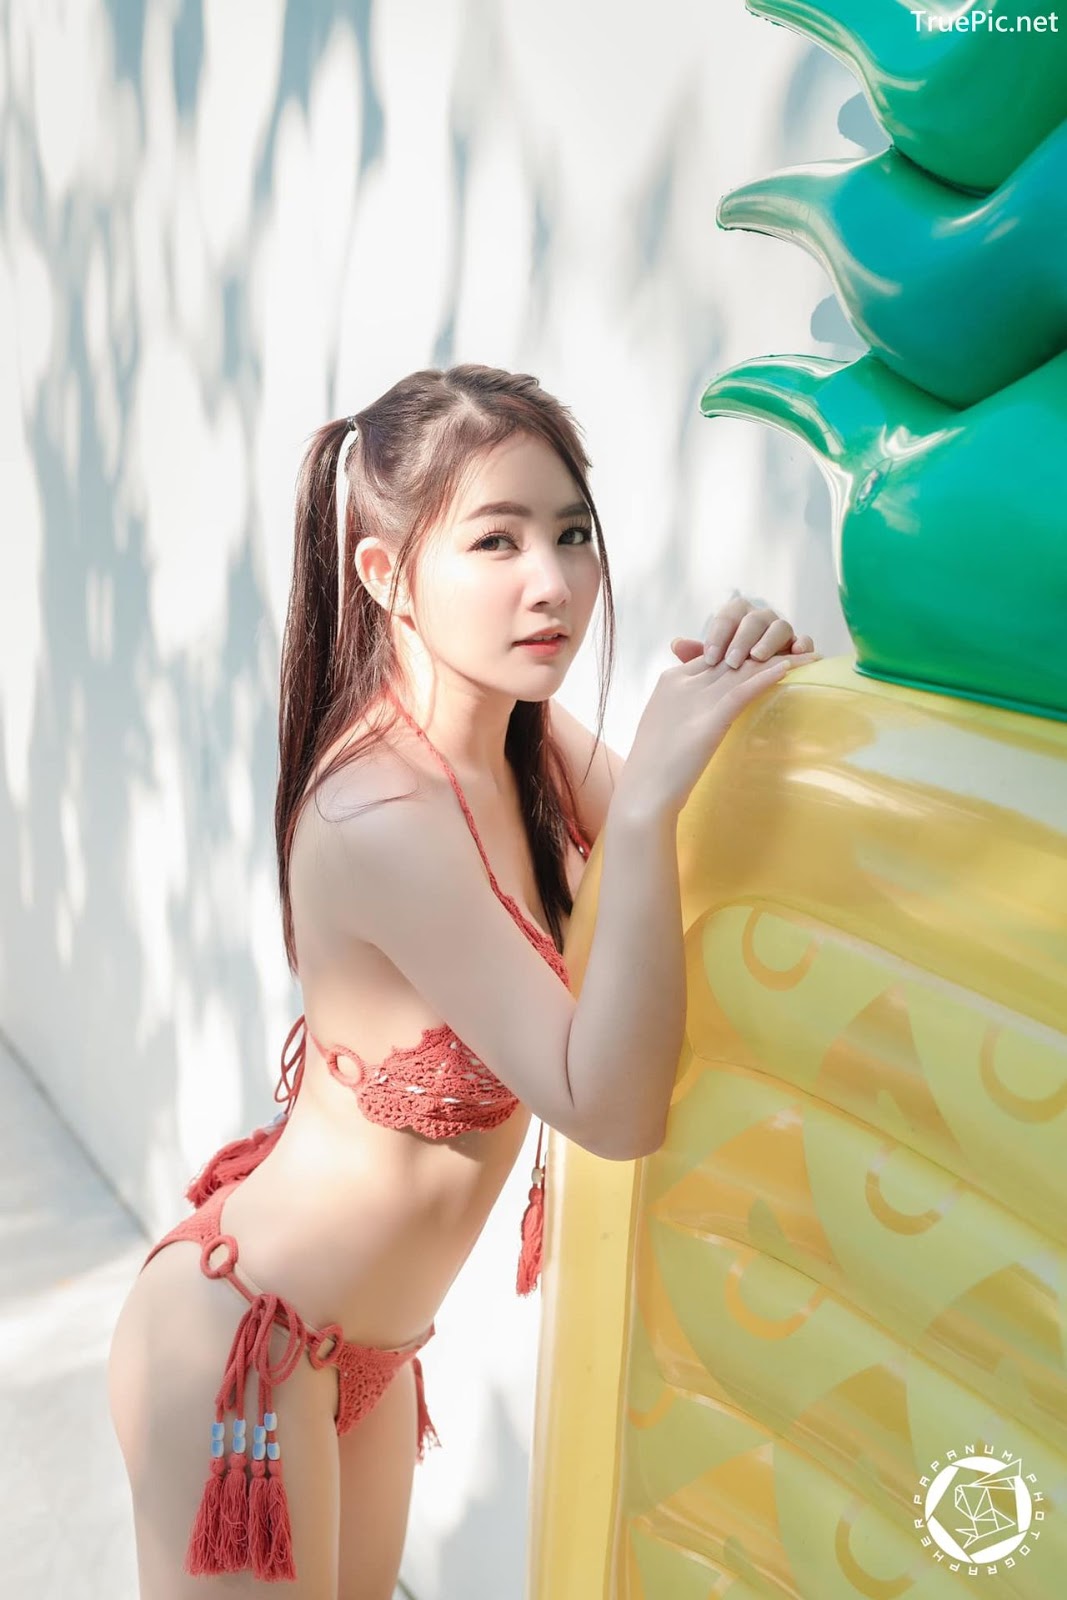 Image-Thailand-Hot-Model-Mind-Varunrapat-Woolen-Bikini-In-Swimming-Pool-TruePic.net- Picture-17